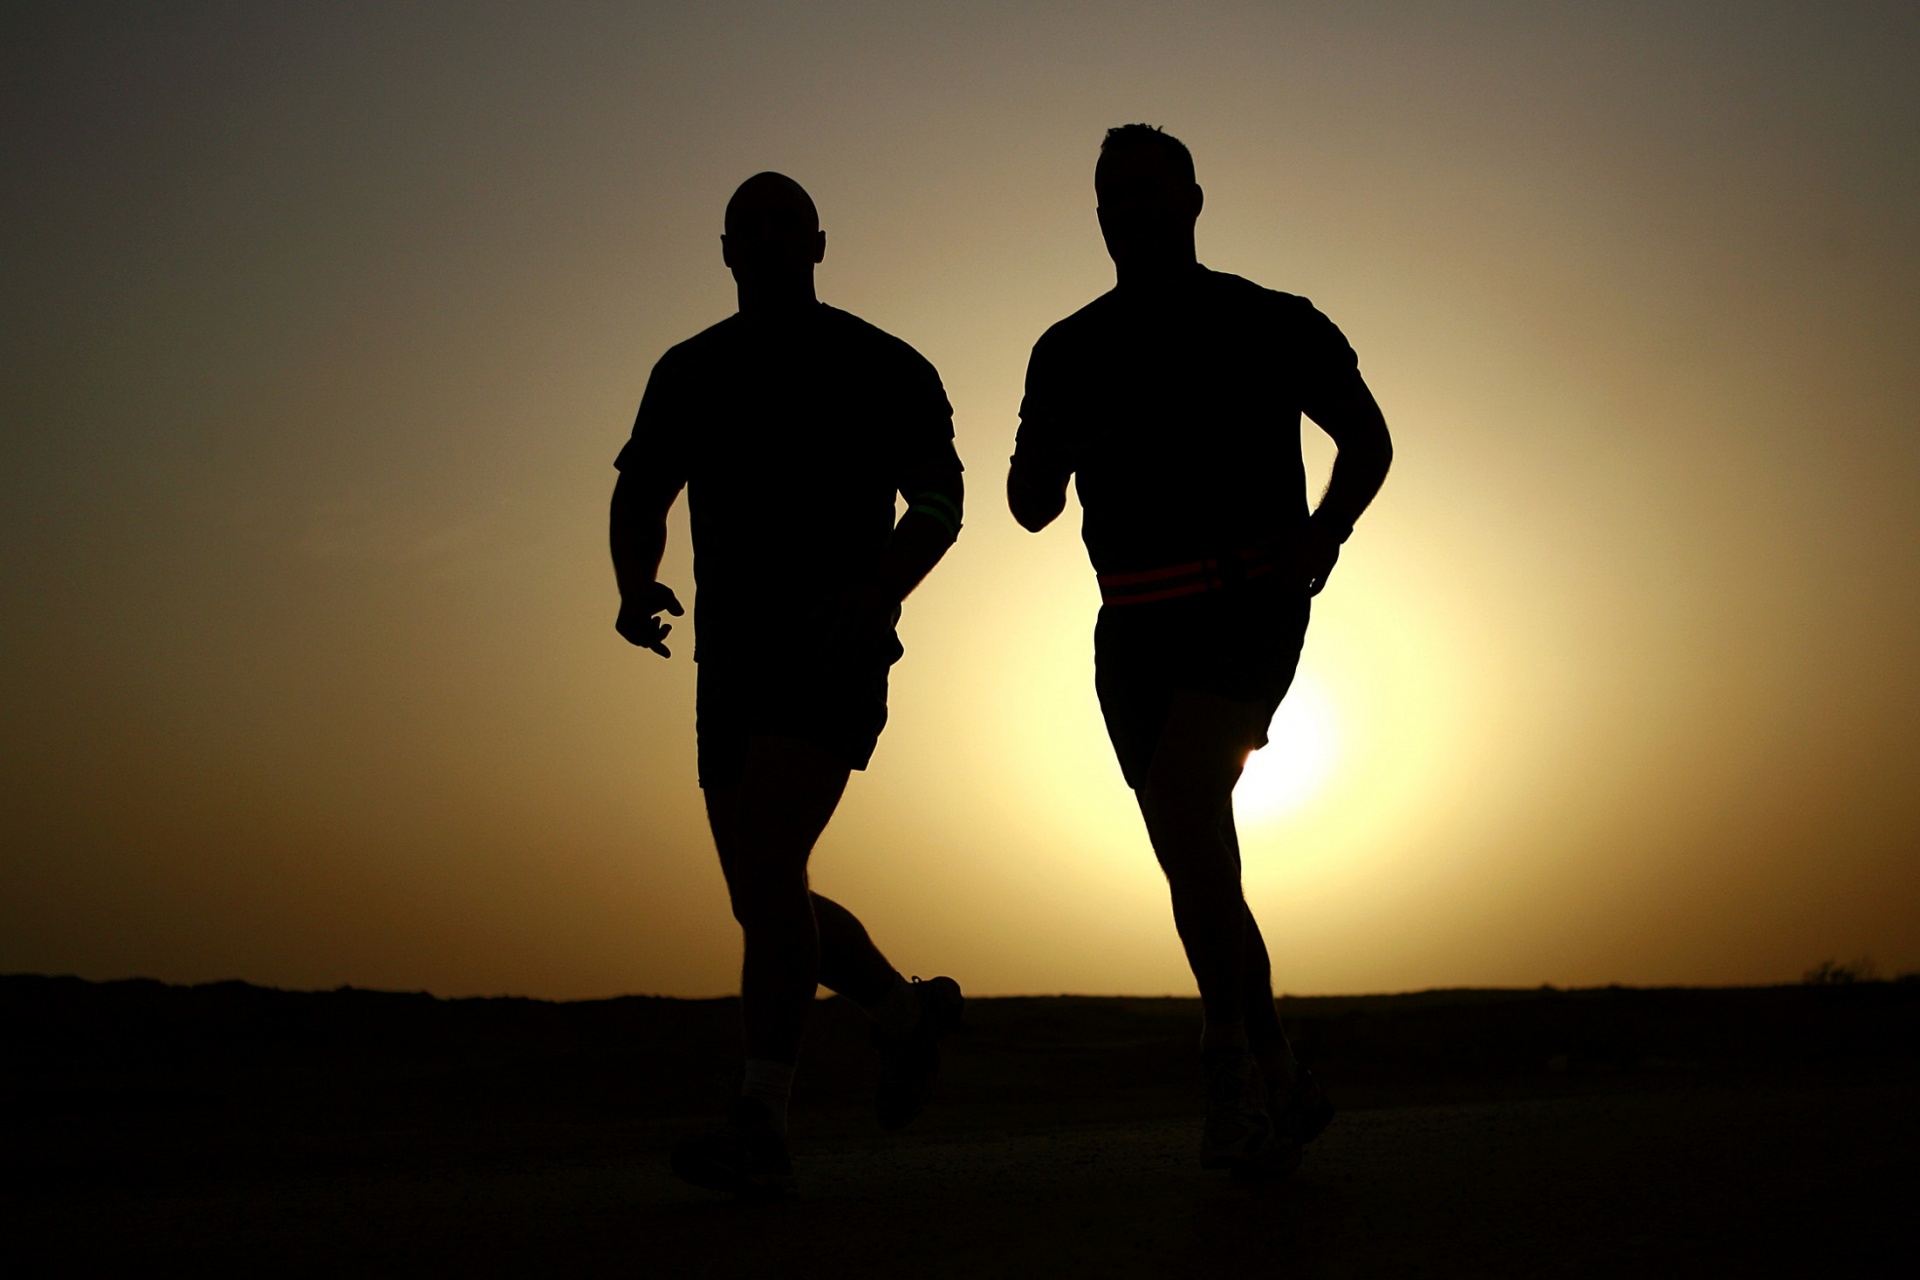 Runners Training At Sunset